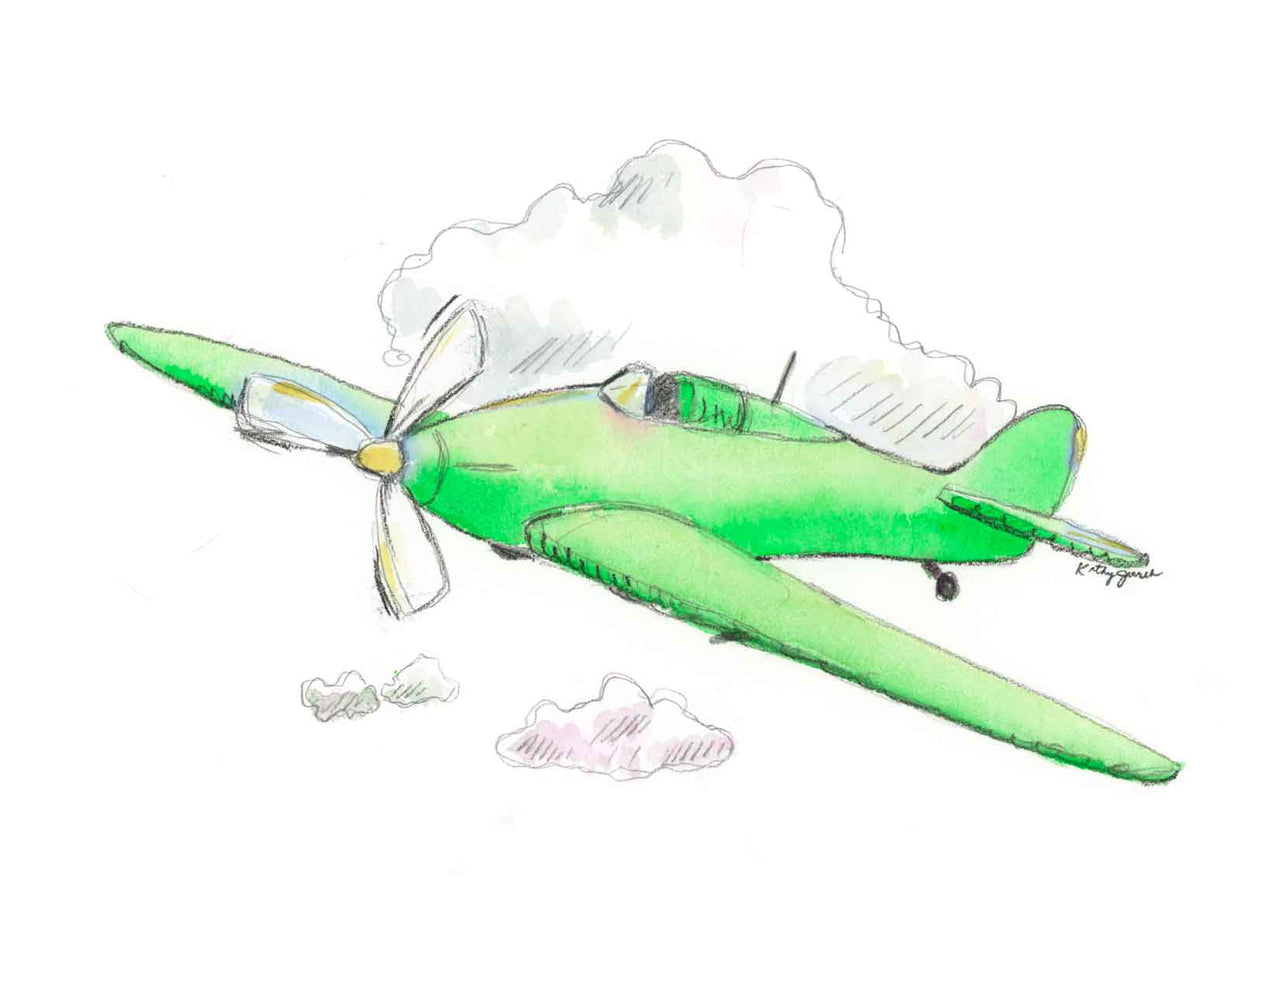 Green Airplane Print